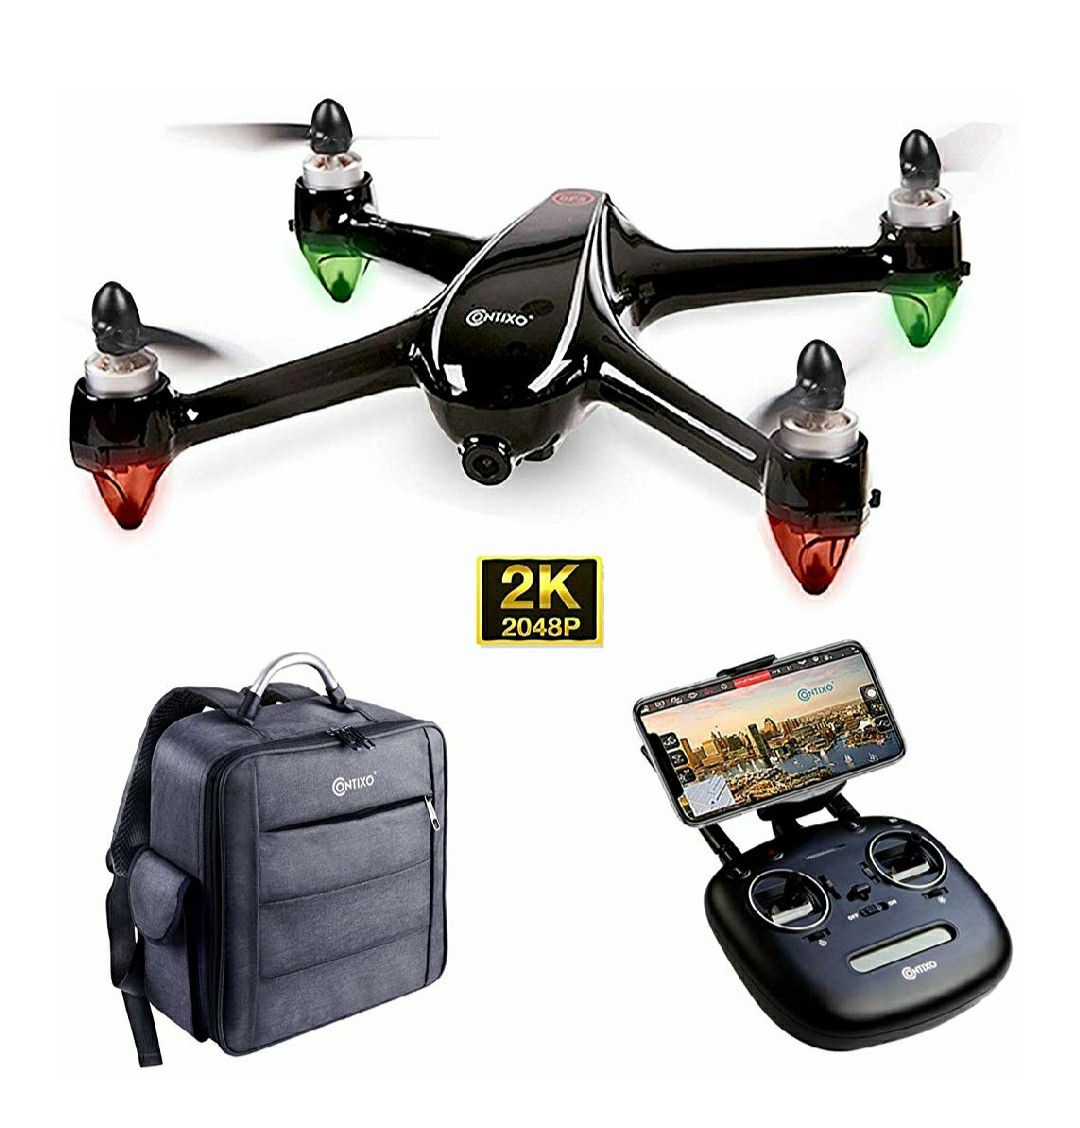 2K advanced 5G drone GPS